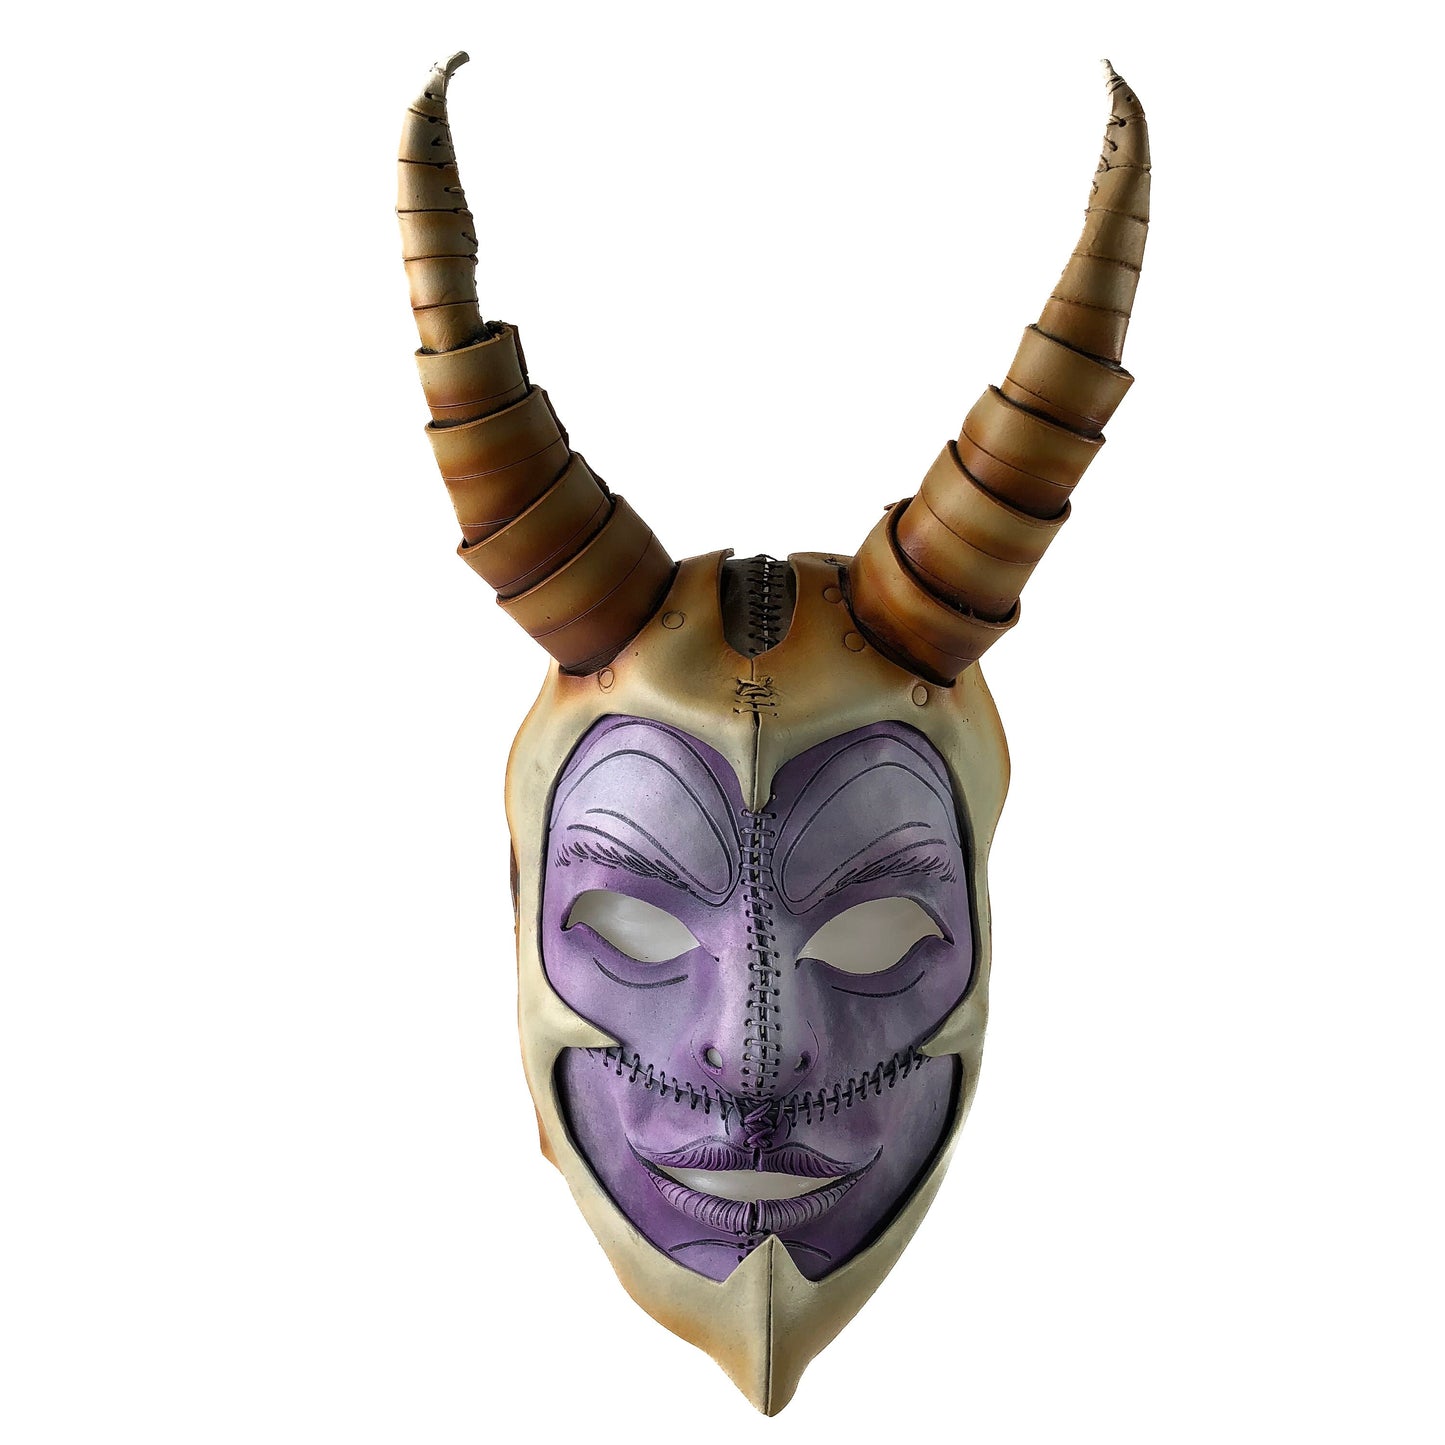 Warhammer Handmade Genuine Leather Mask